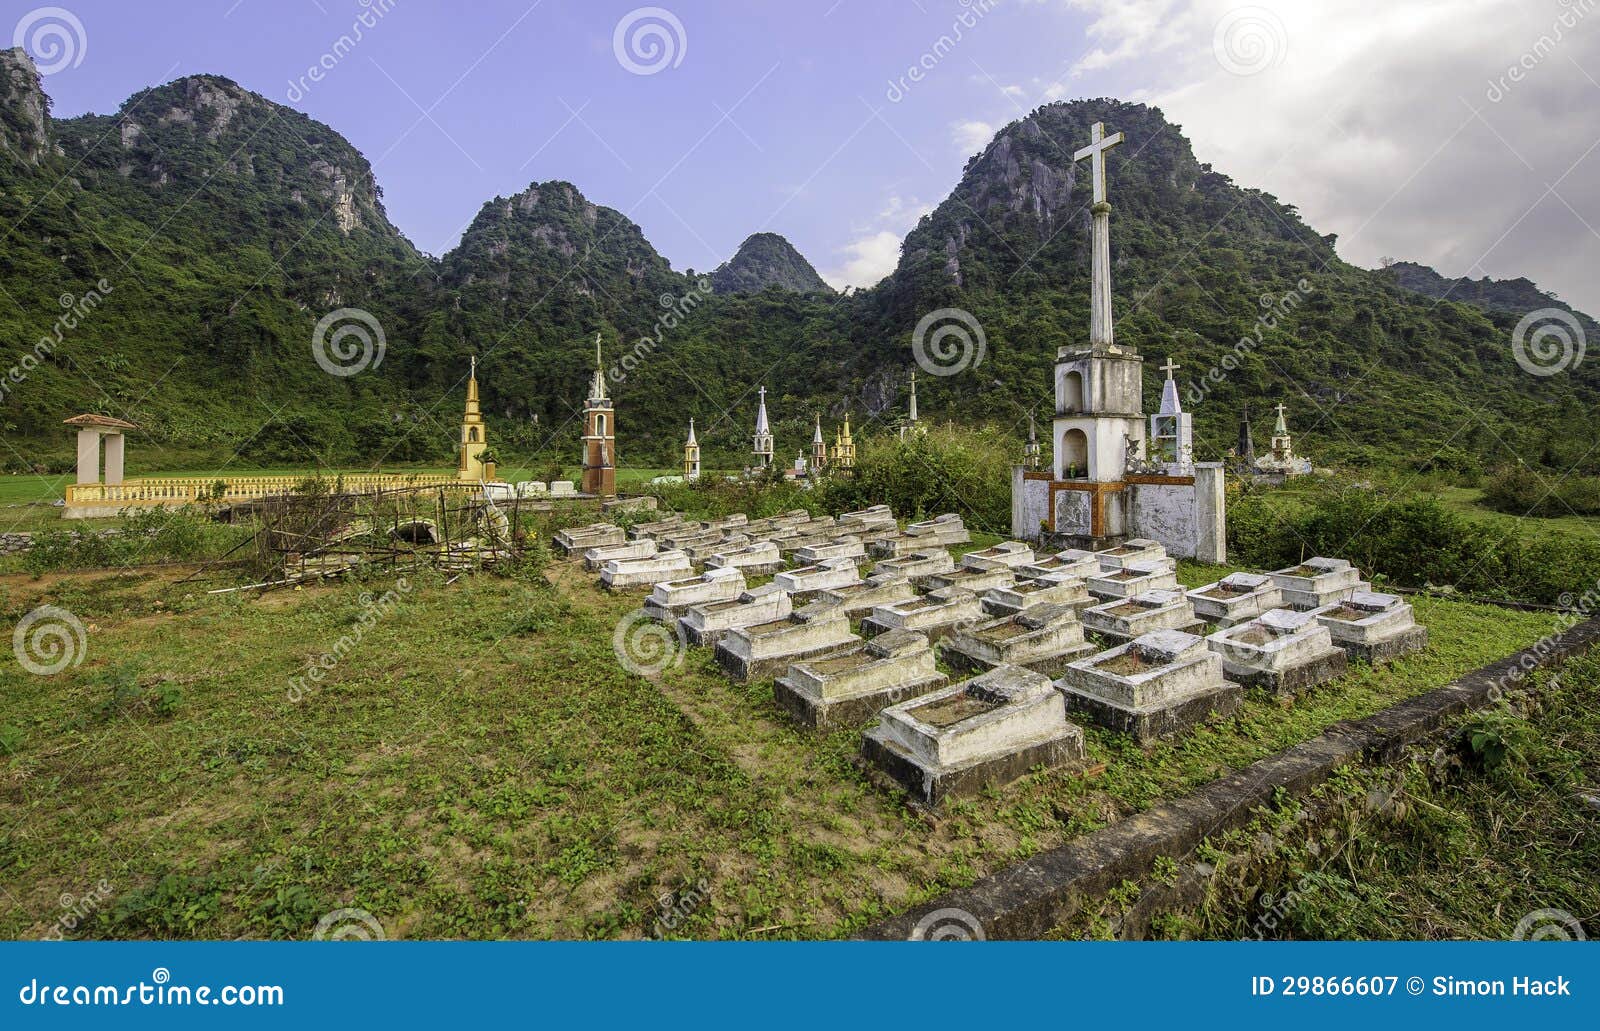 ancient graves in vietnam 6